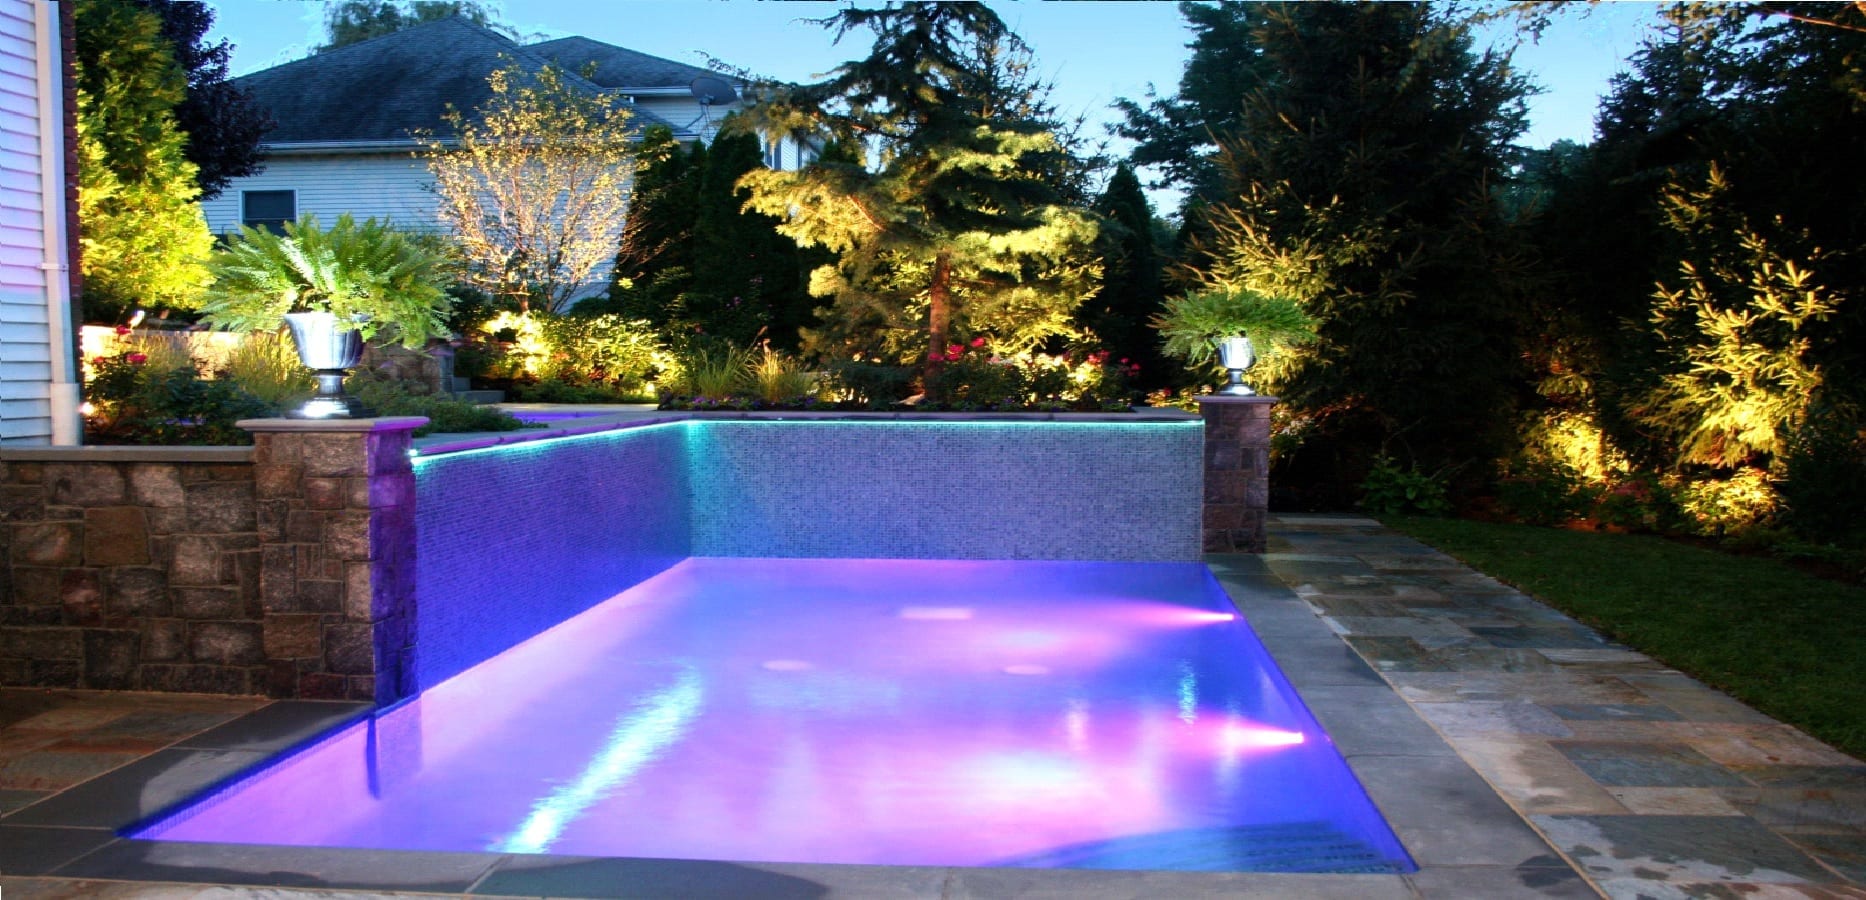 ÉCLAIRAGE Piscine – 56 idées et conseils pour la sublimer  Led pool  lighting, Swimming pool lights, Led lighting bedroom